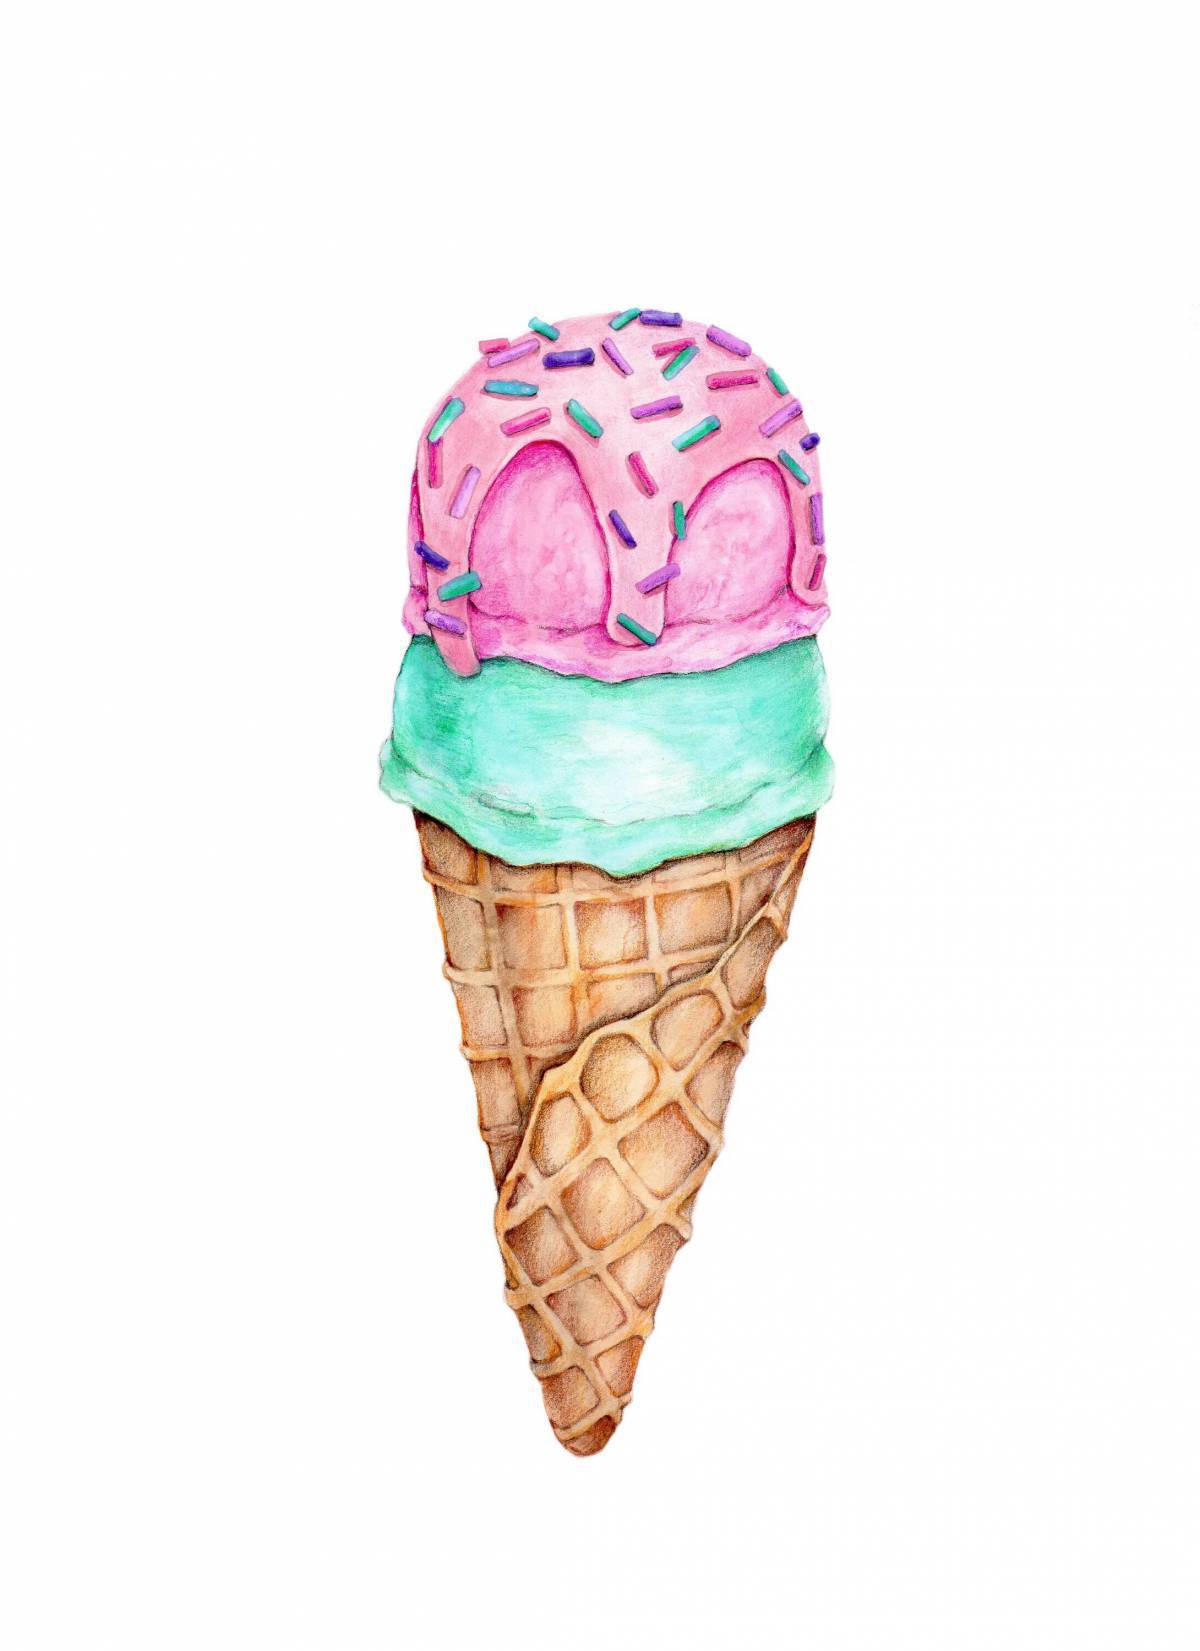 Мороженка рисунок. Рожок мороженого. Мороженое рисунок. Нарисовать мороженое. Нарисовать мороженое в рожке.